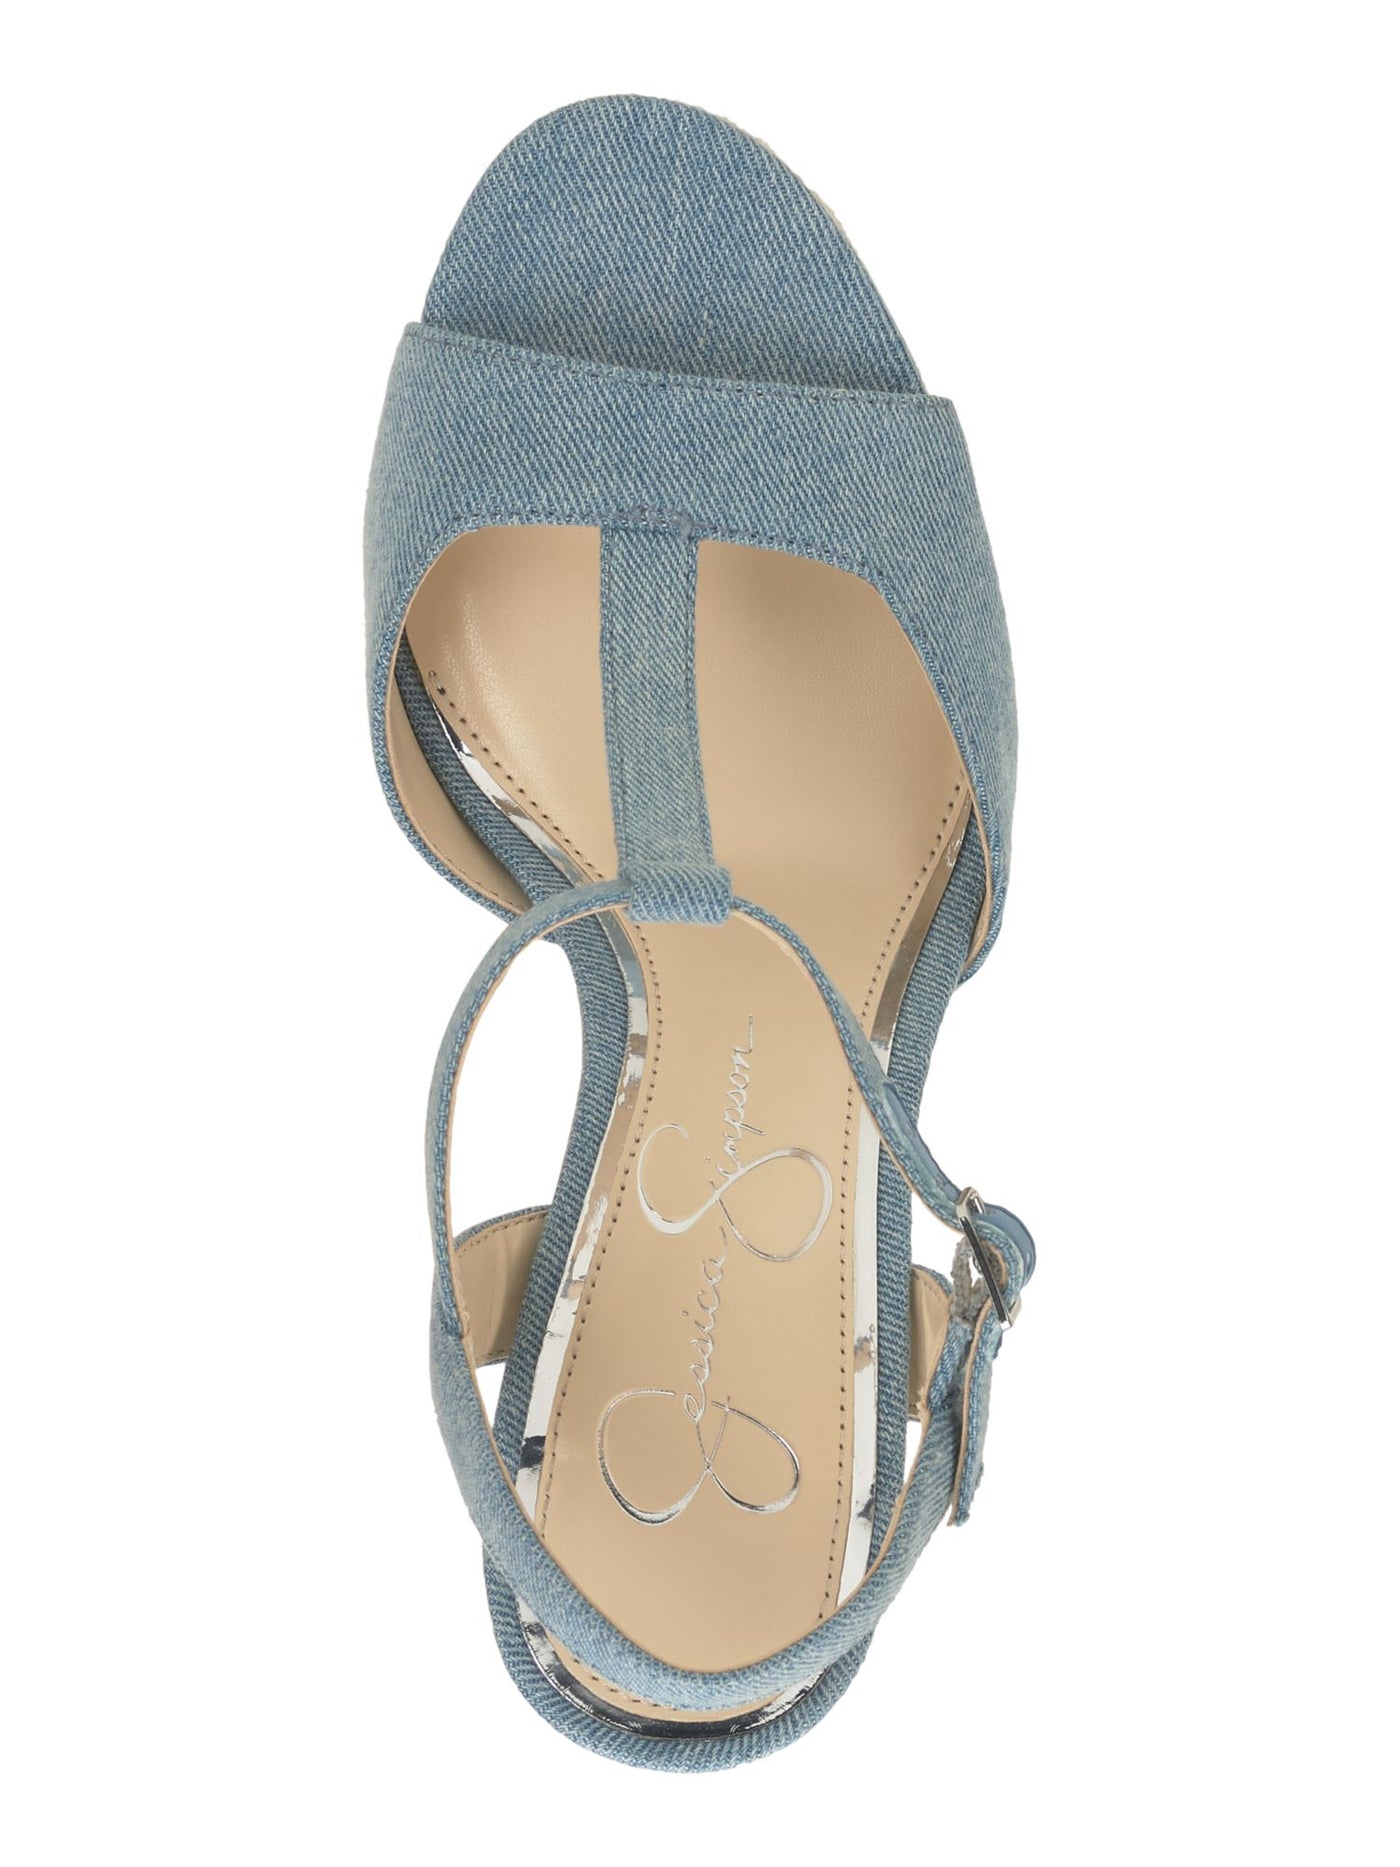 JESSICA SIMPSON Womens Blue 1-1/2" Platform T-Strap Padded Ameeka Round Toe Platform Buckle Espadrille Shoes 7 M